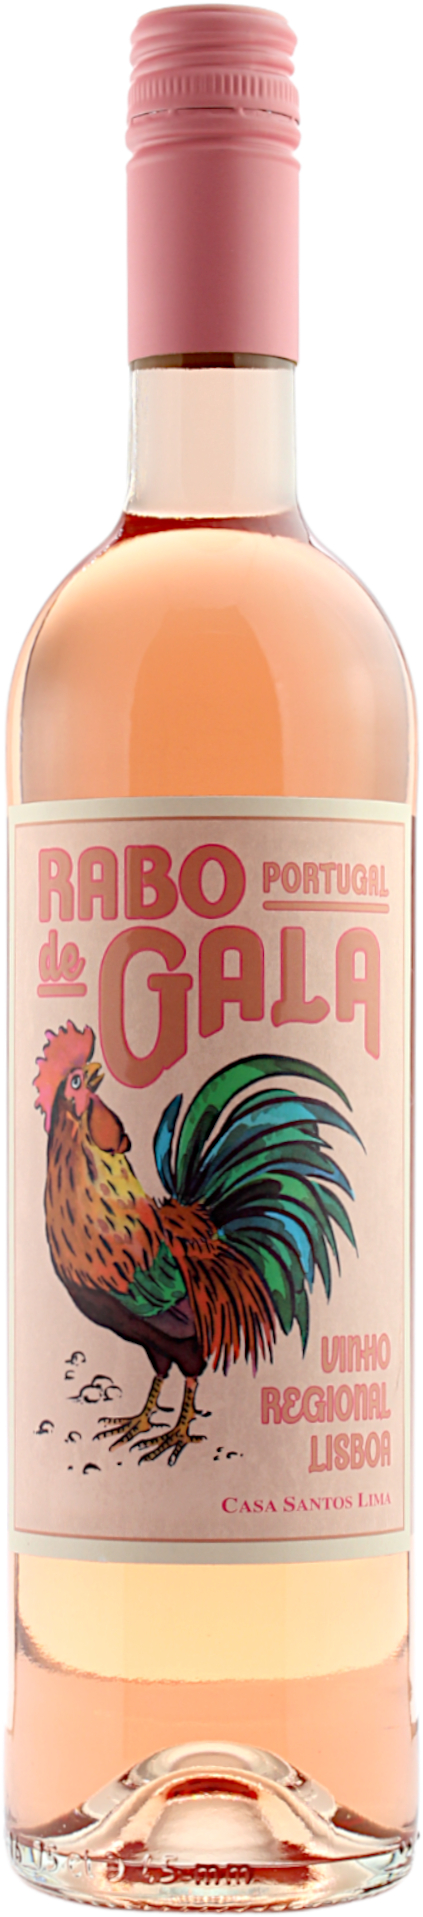 Rabo de Gala Rosé Vinho Regional Lisboa 12.5% 0,75l